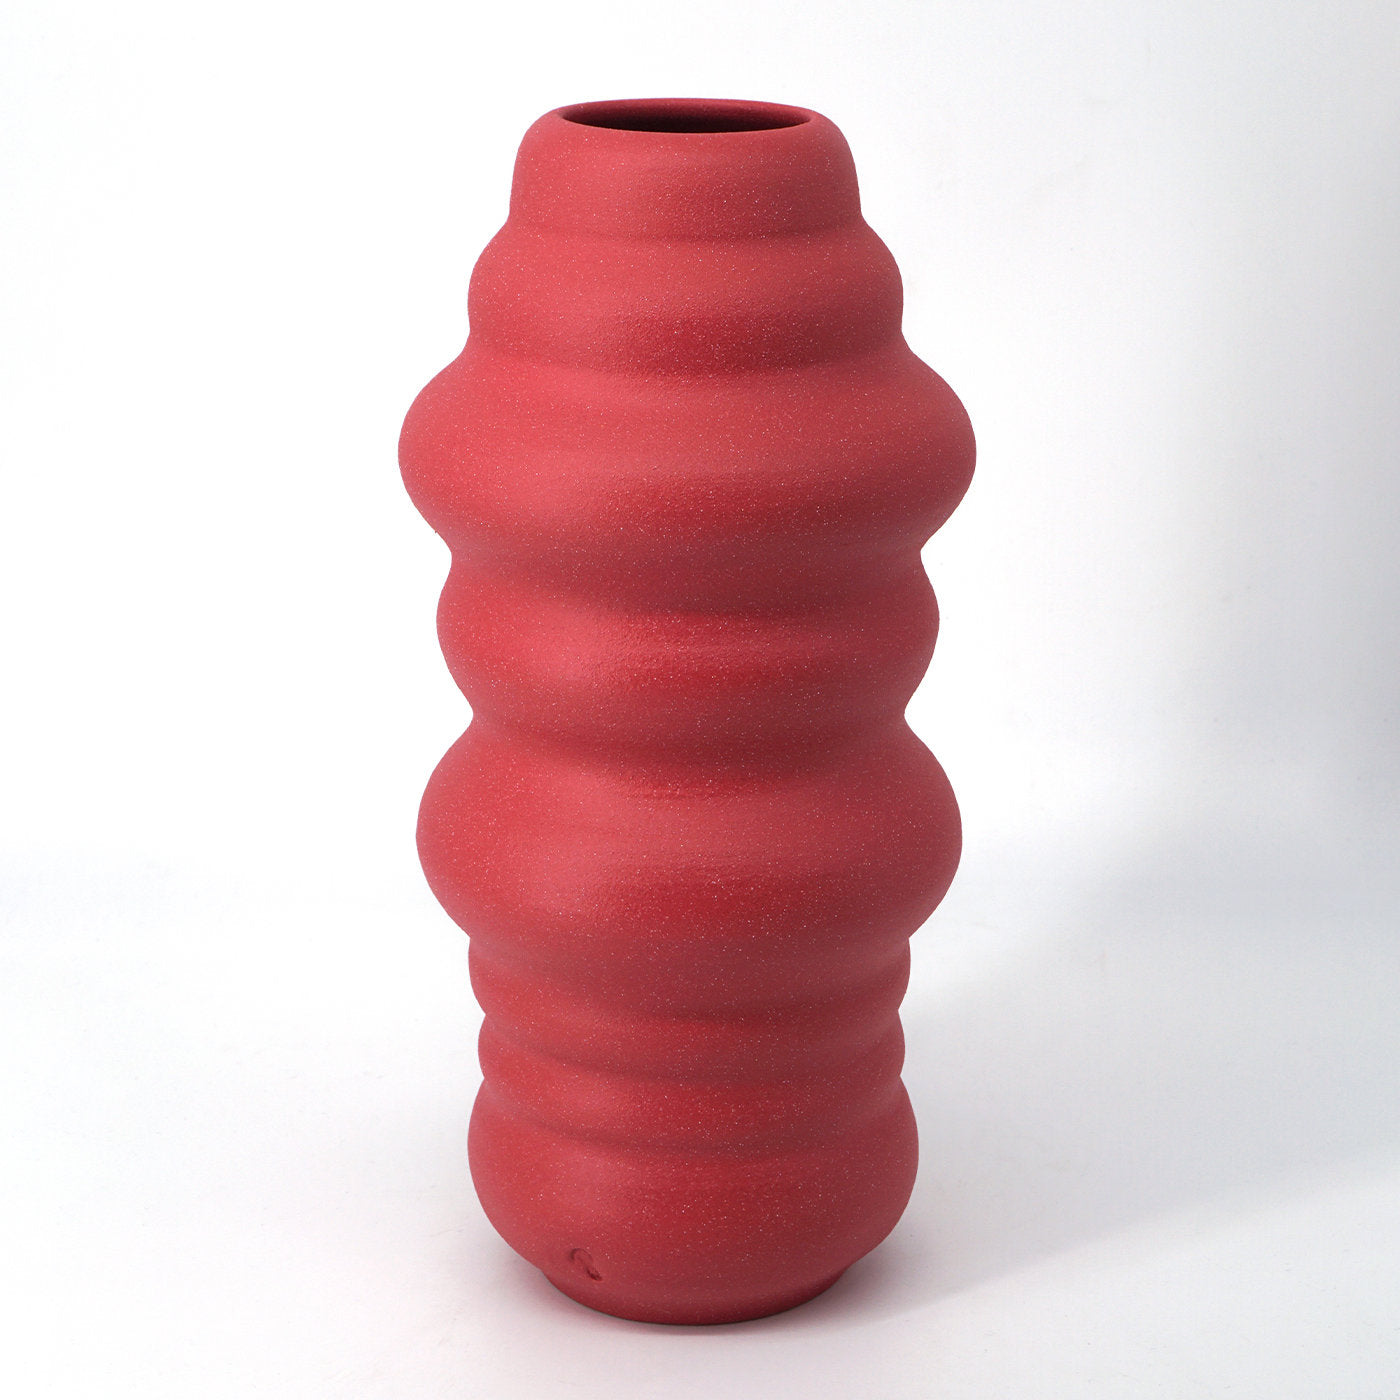 Crisalide Red Vase #8 - Alternative view 2